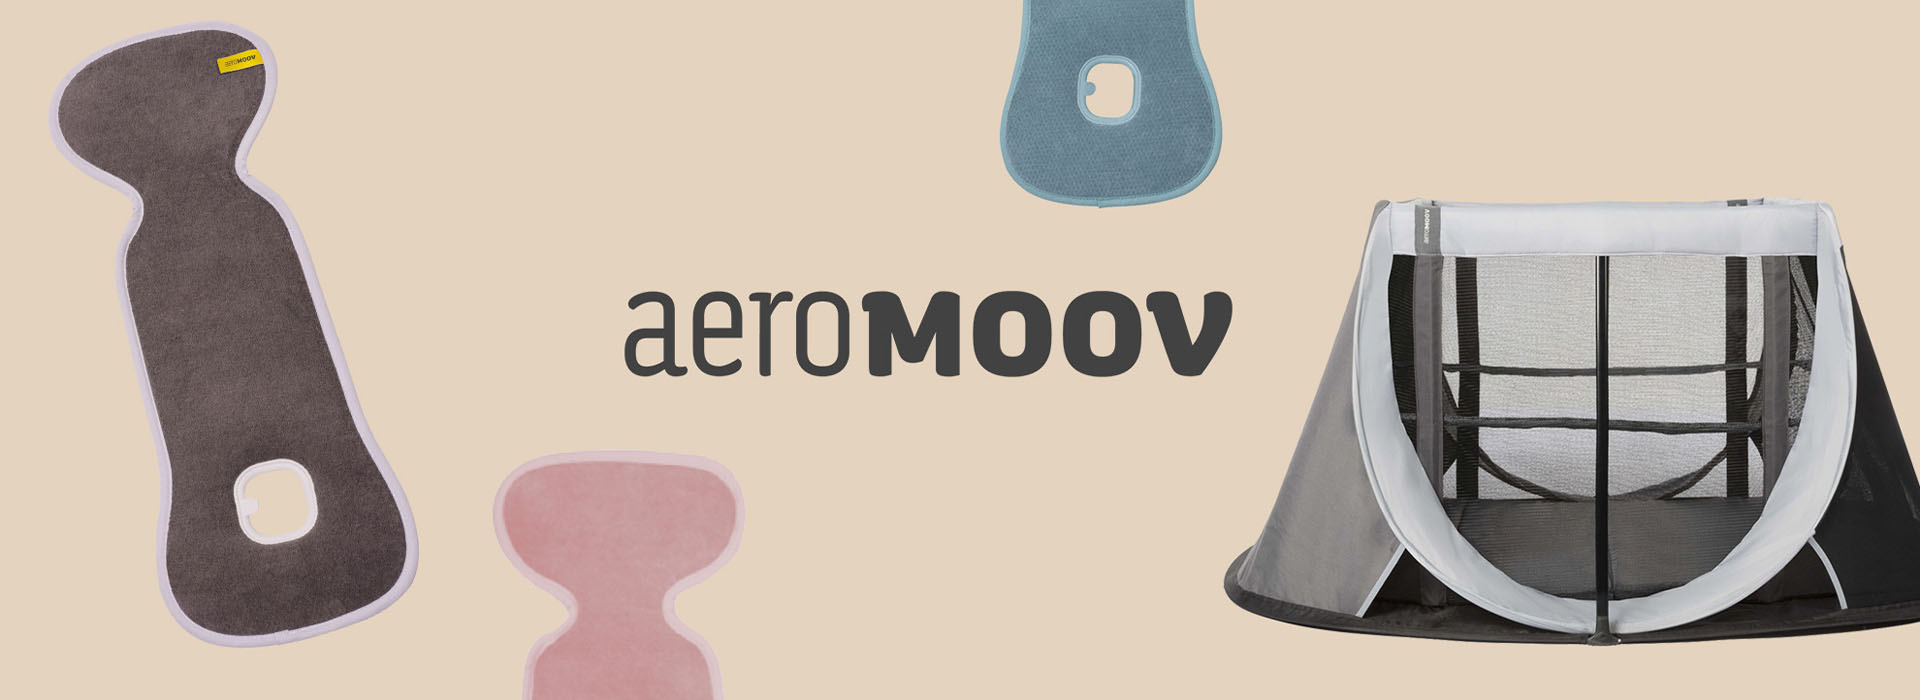 AeroMoov-header-1920x700.jpg